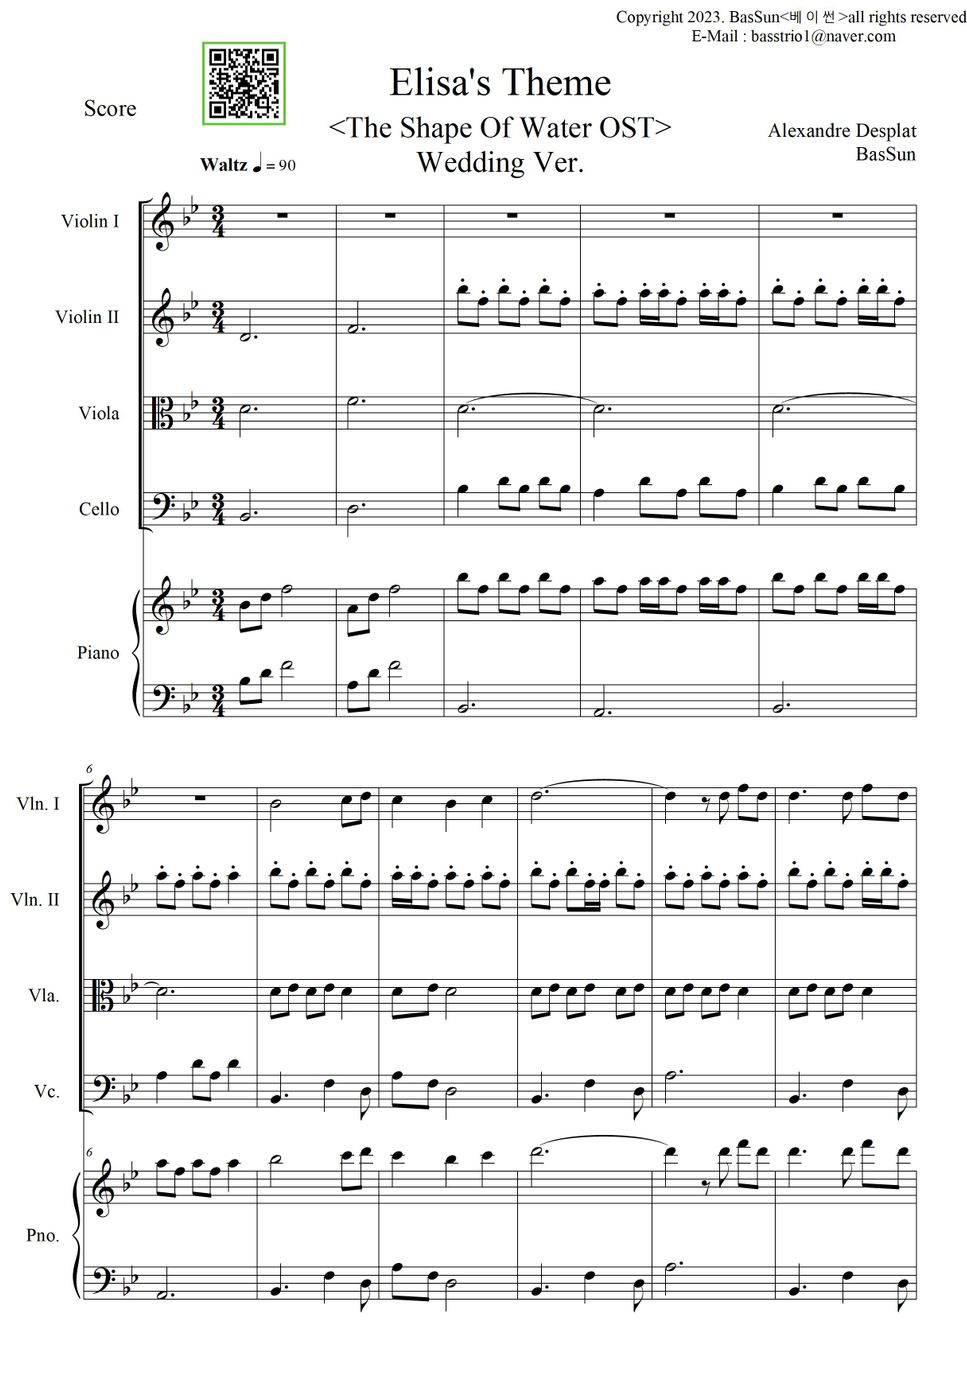 Alexandre Desplat - Elisa's Theme (Classic Piano Quartet / Arrangement / The Shape Of Water OST) by BasSun